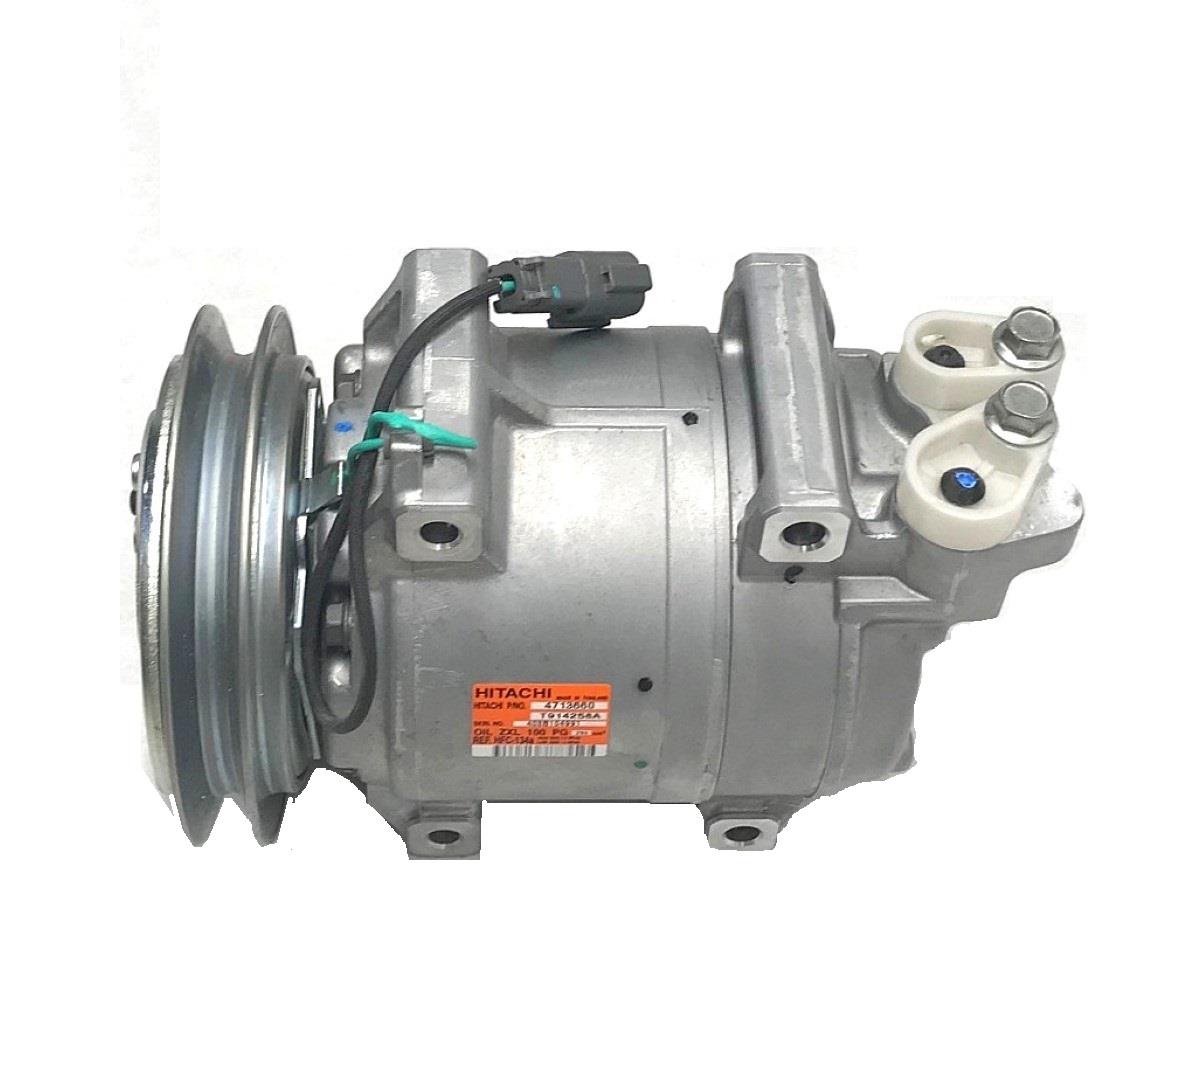 SP-2142 | SP-2142 Air Conditioner Compressor (4) (Large).jpg